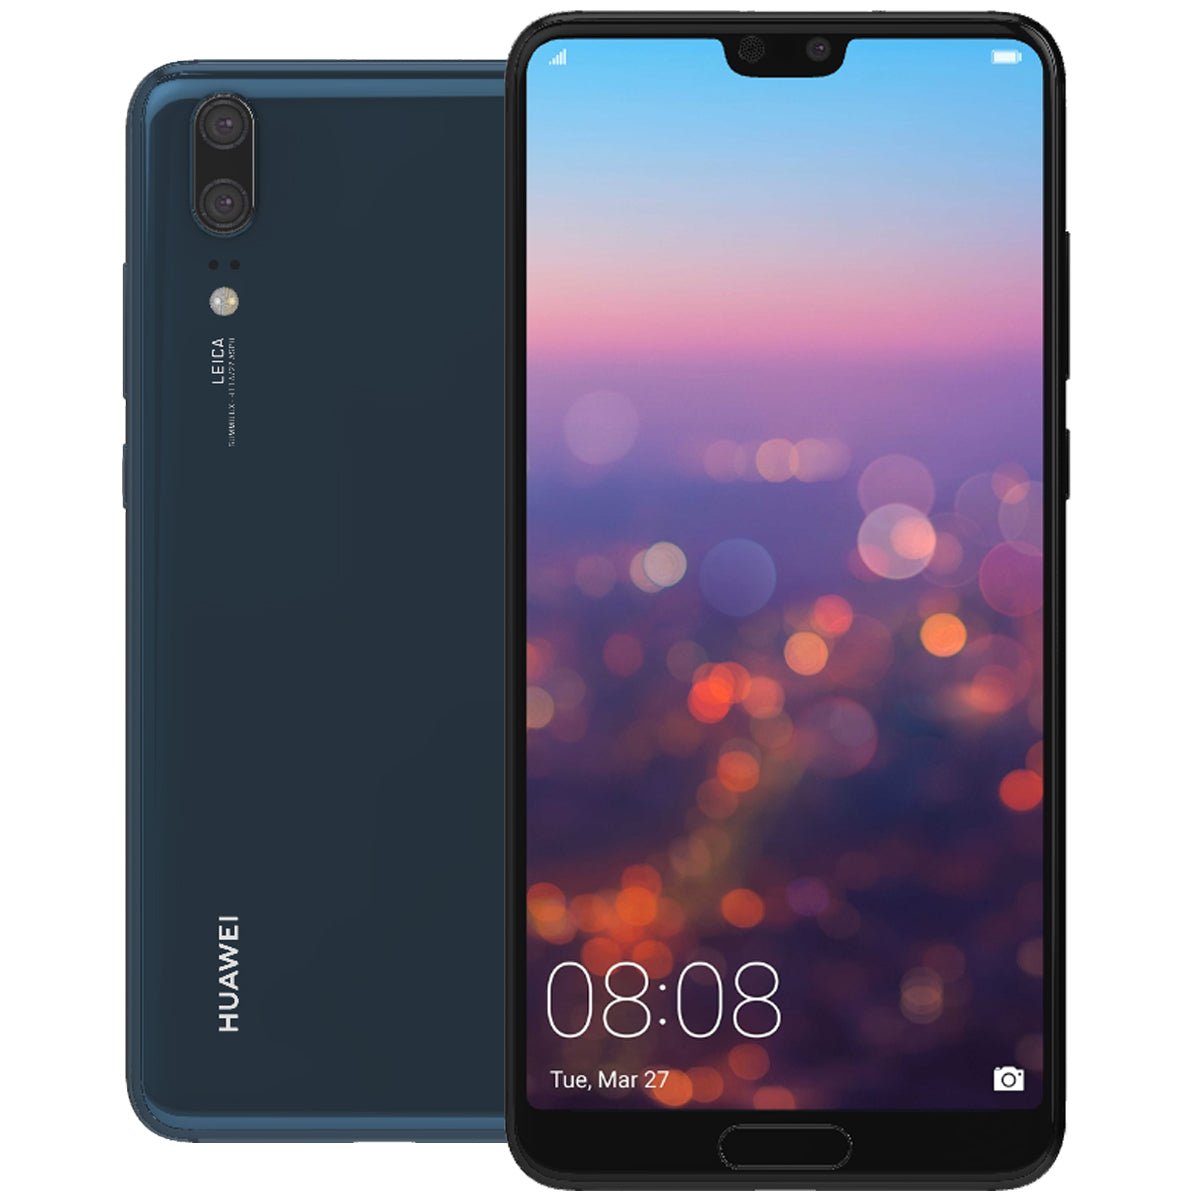 Huawei P20 FAIR Condition Unlocked Smartphone - RueZone Smartphone Midnight Blue 128GB